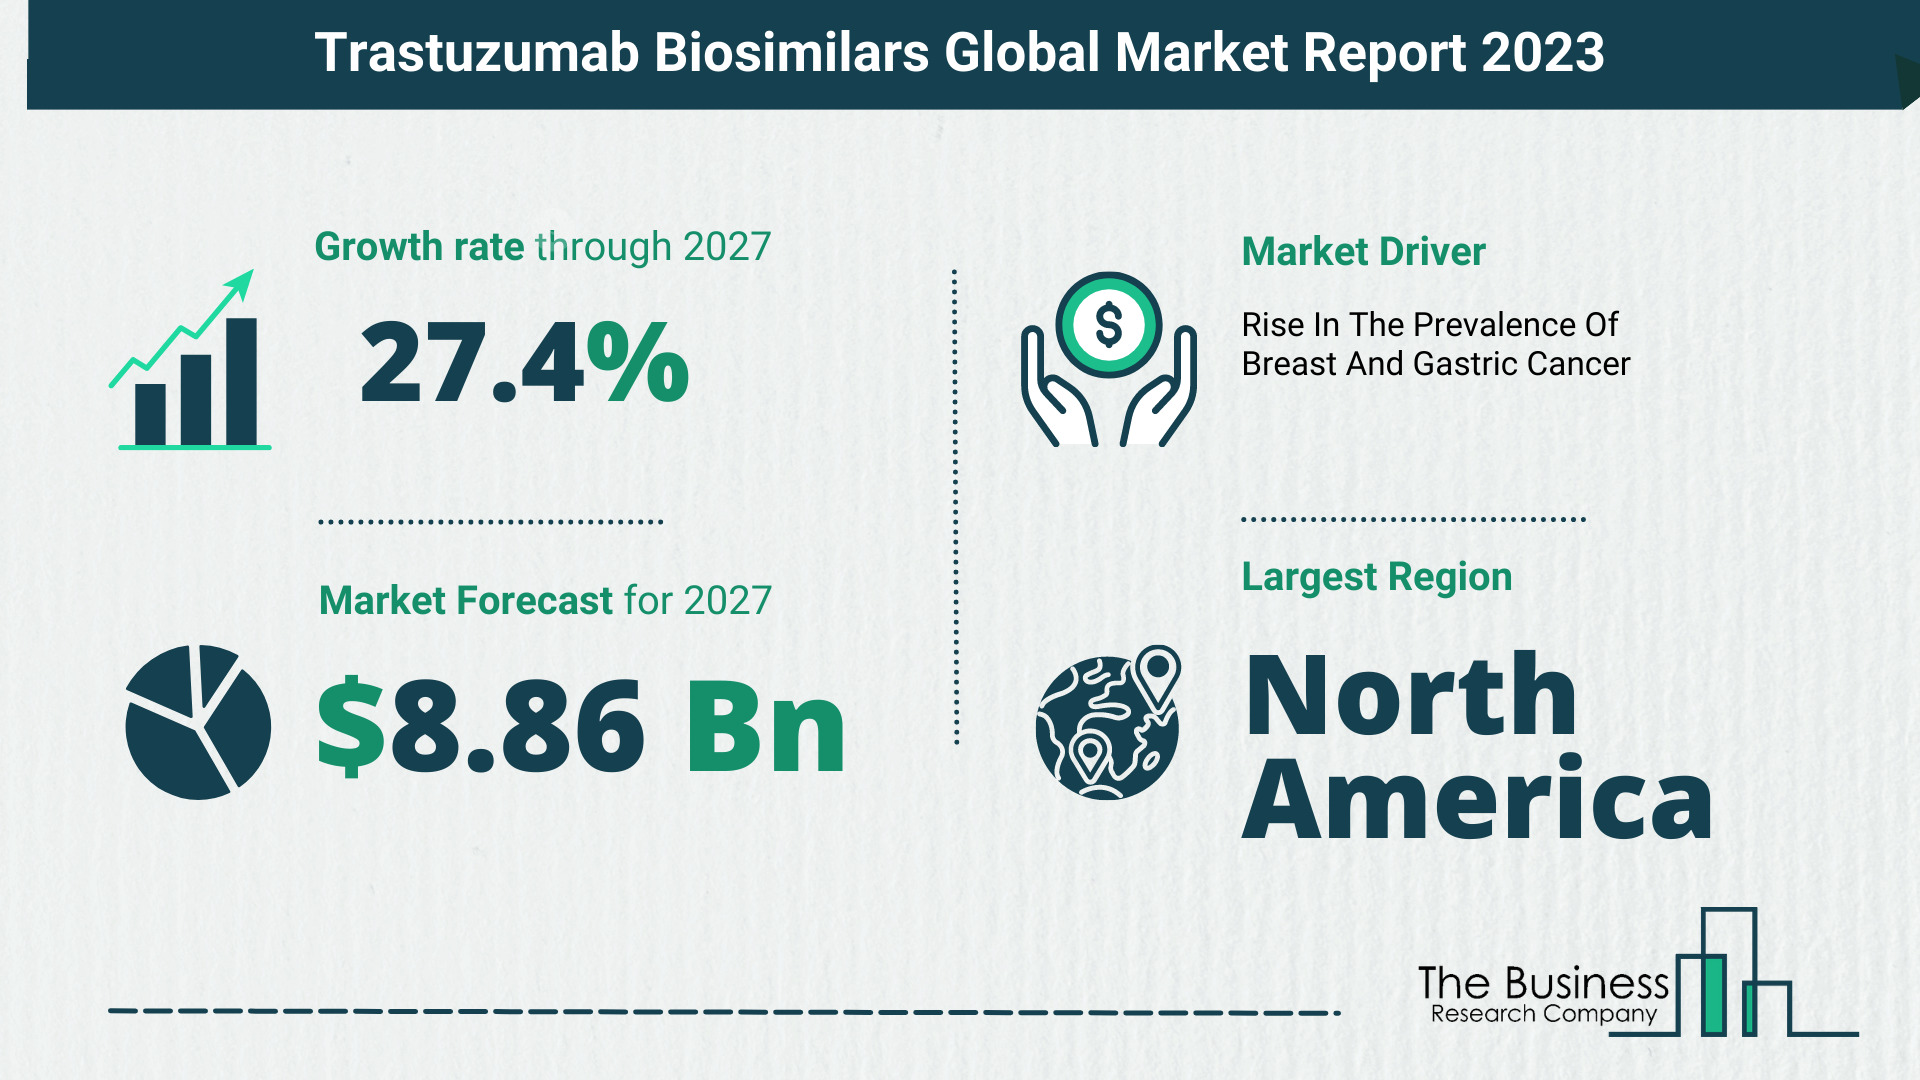 Global Trastuzumab Biosimilars Market